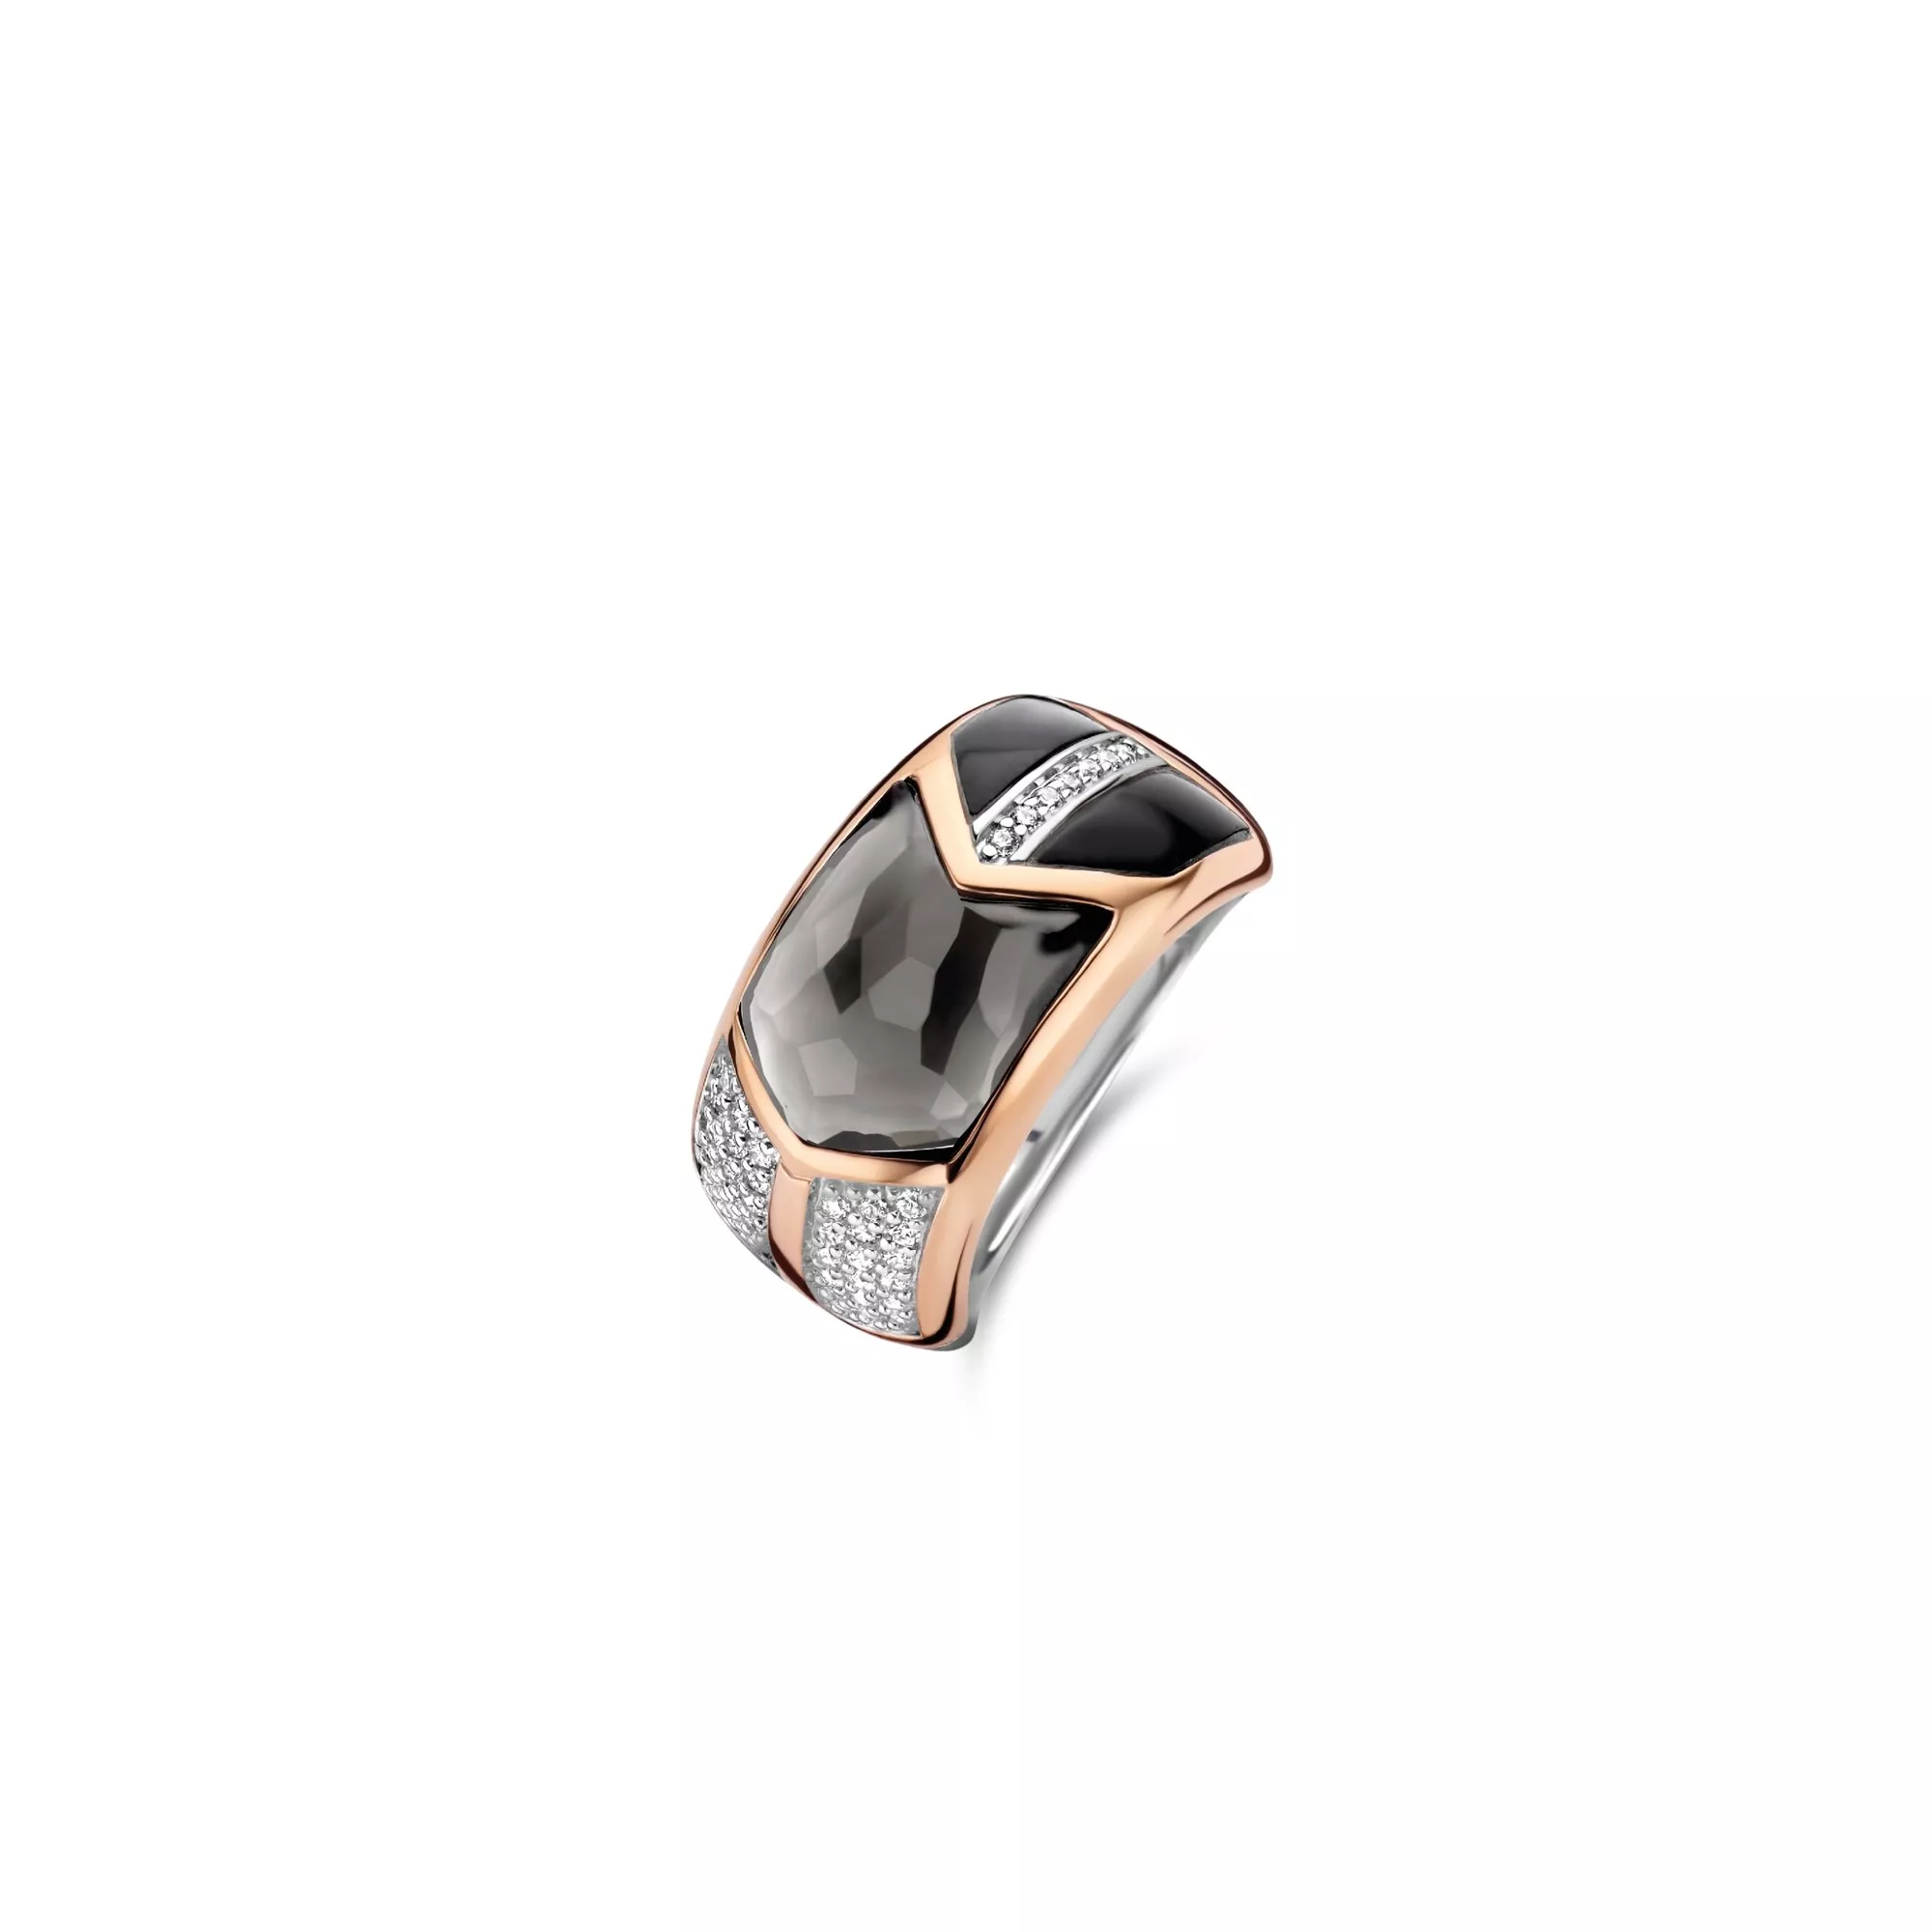 TI SENTO-Milano 12204GB Ring zilver-zirconia-onyx rosekleurig-zwart-grijs